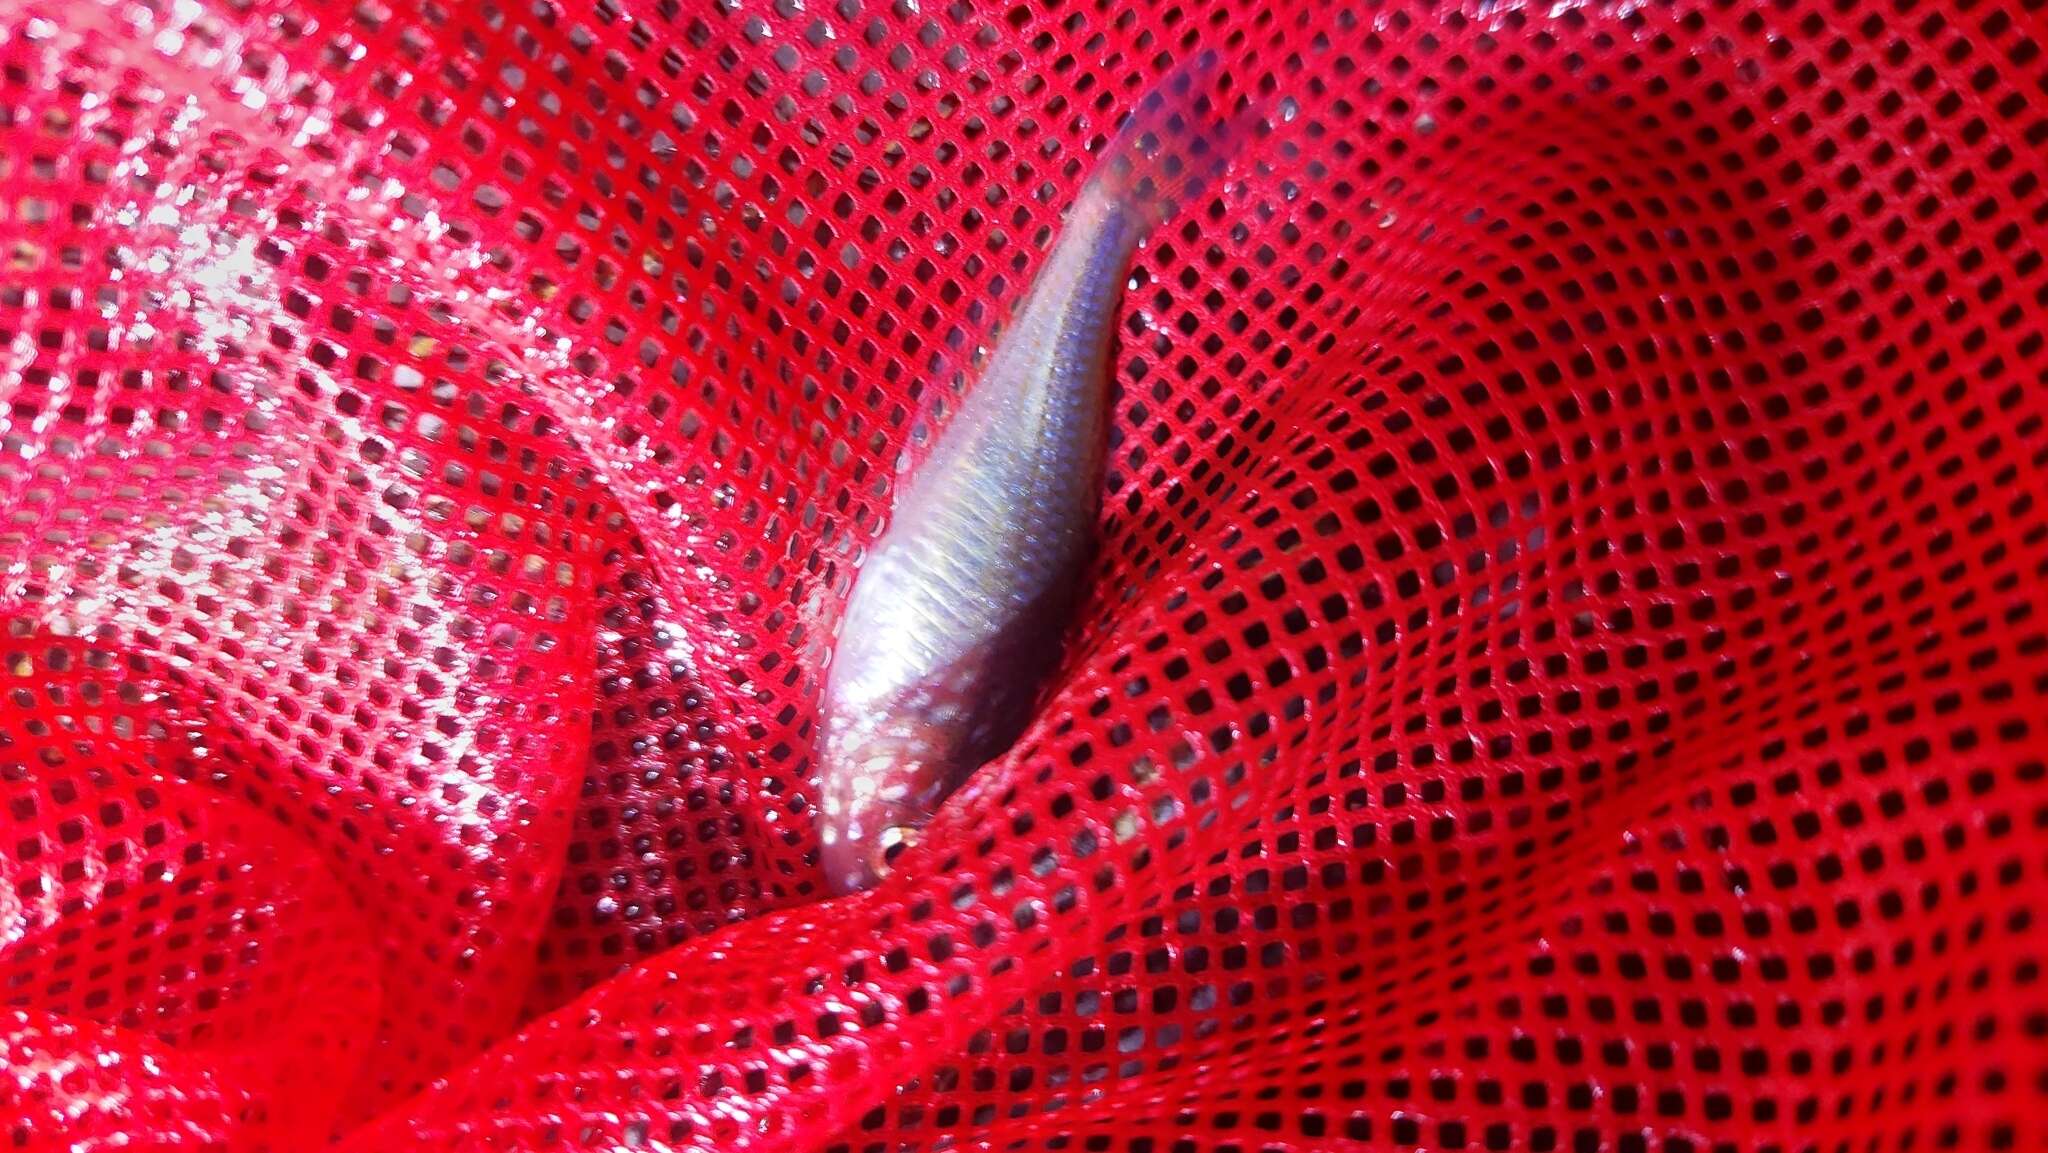 Image of Crimson-spotted rainbowfish